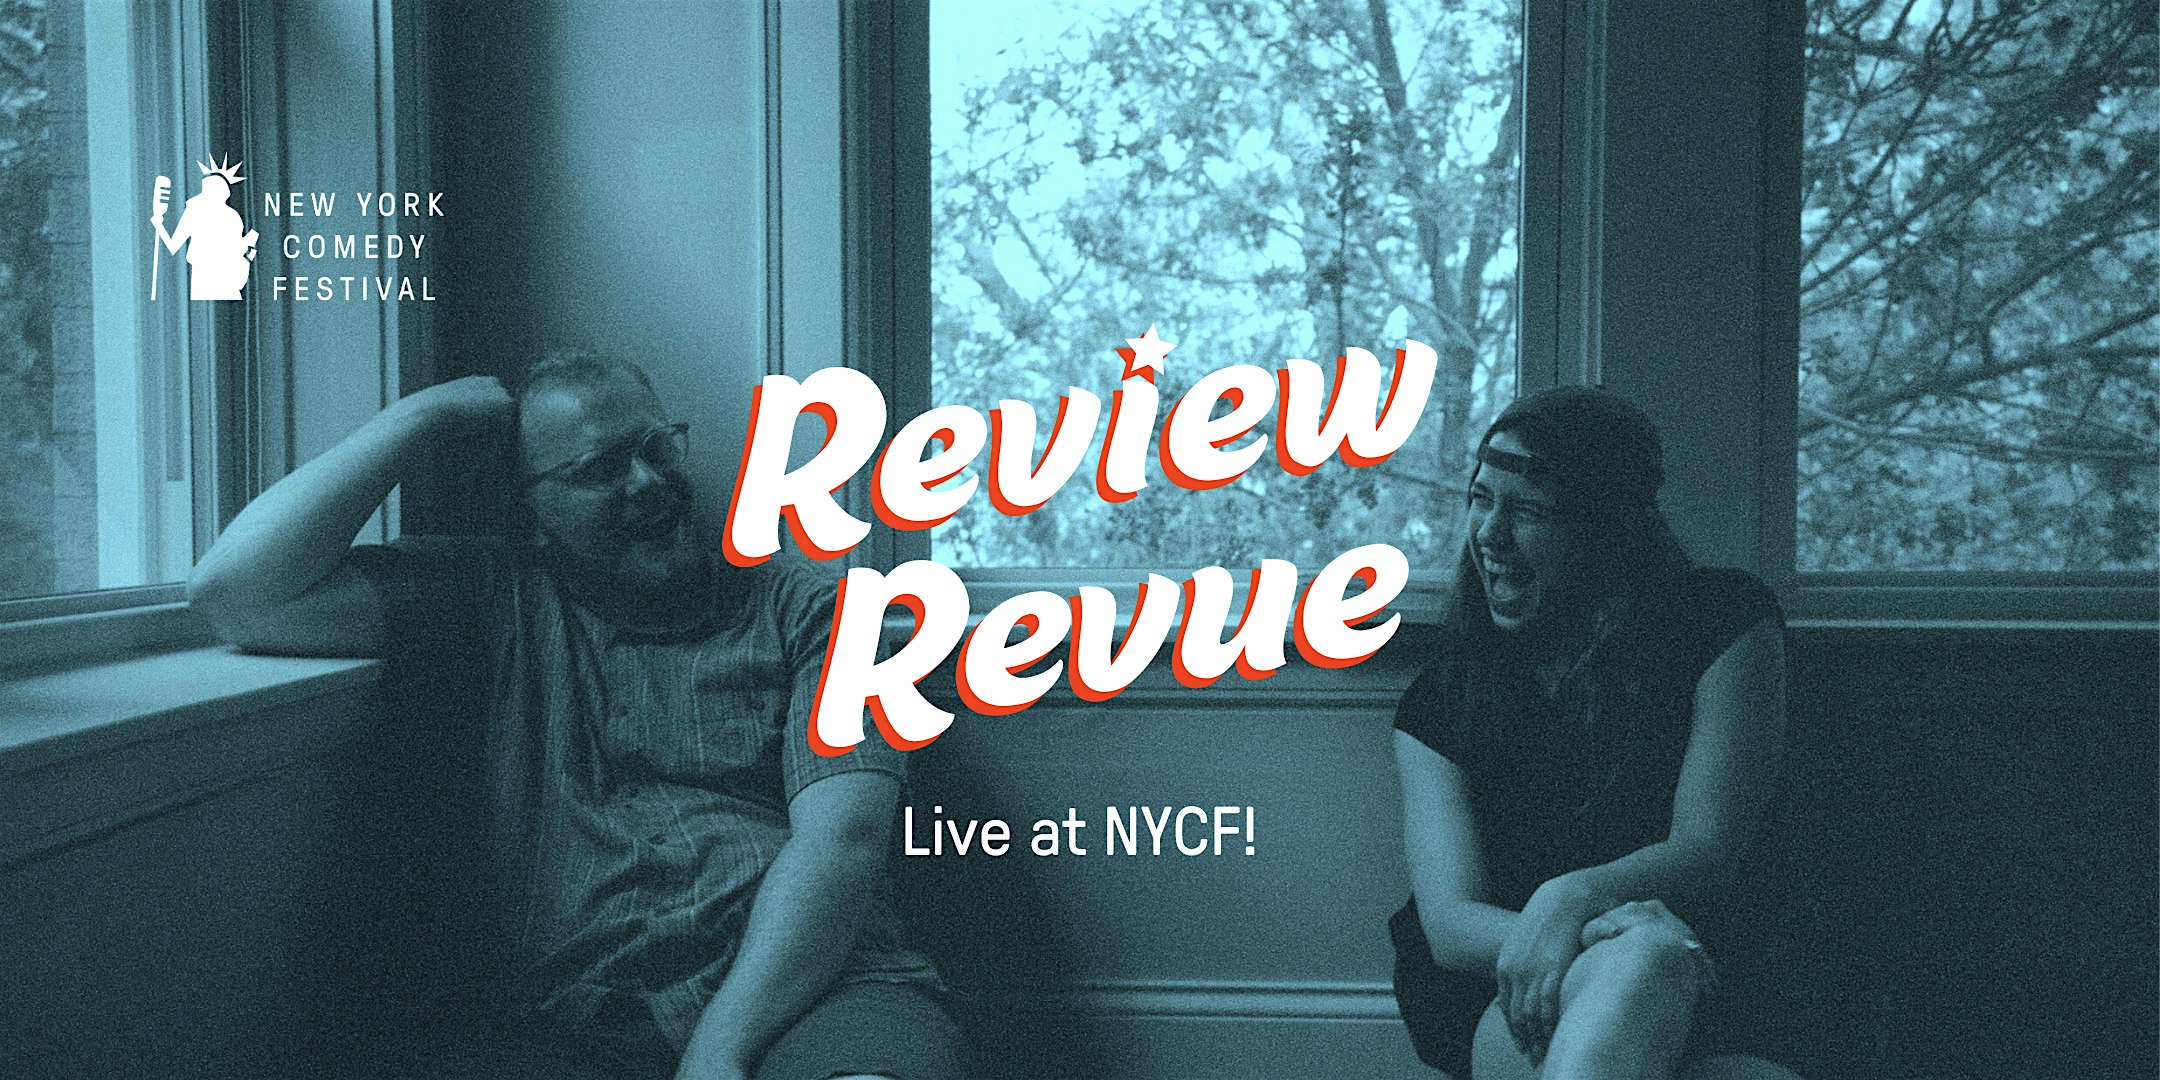 REVIEW REVUE Live at NYCF!